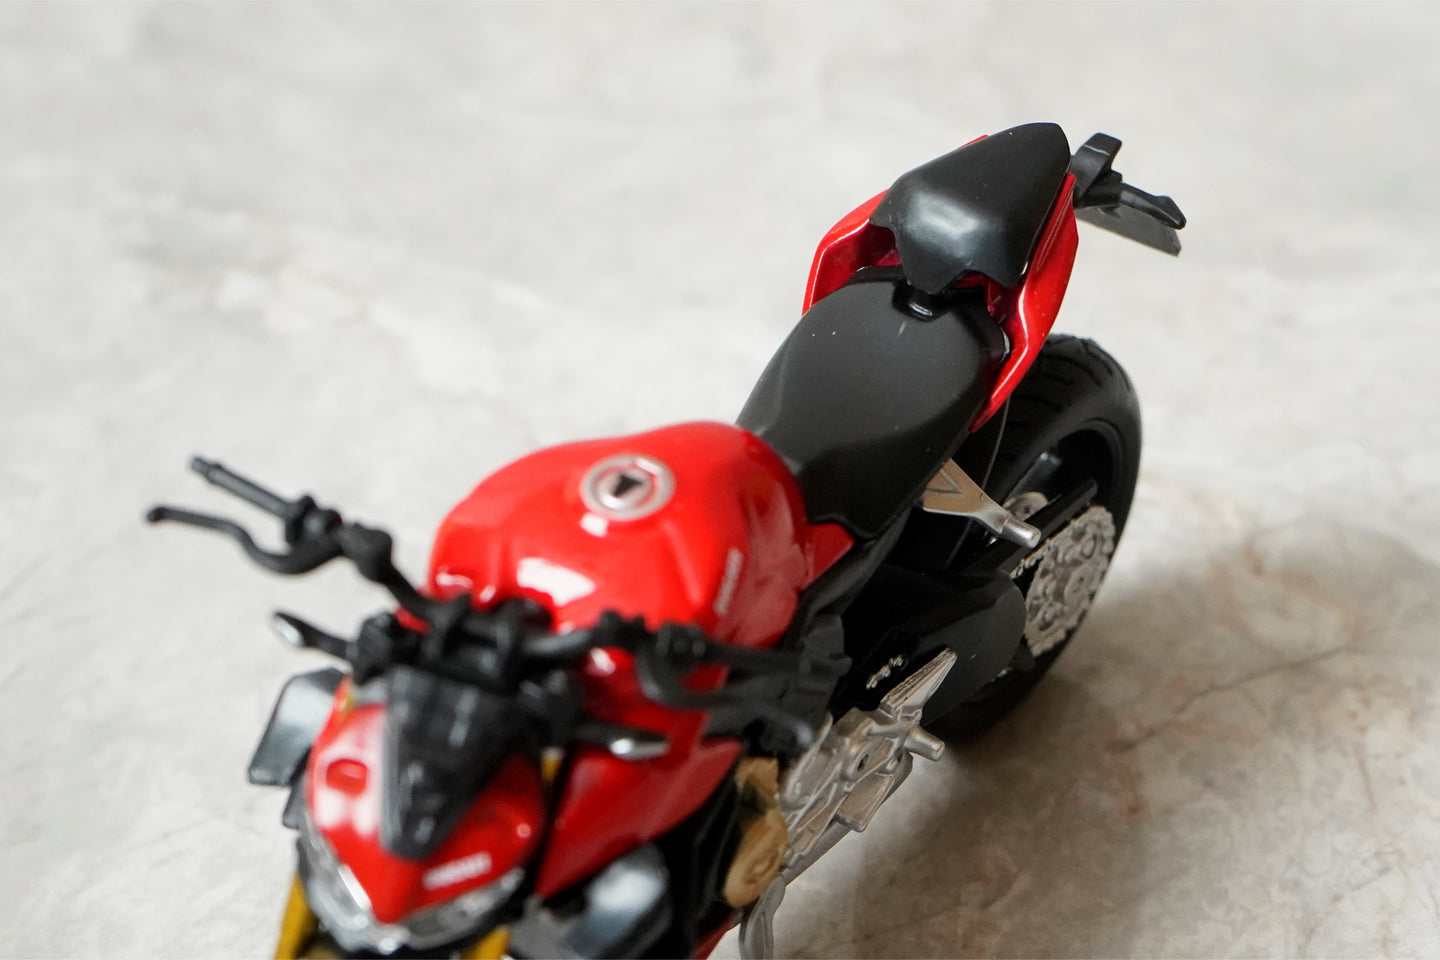 Ducati Super Naked V4 S Diecast Bike 1:18 Motorcycle Model By Maisto